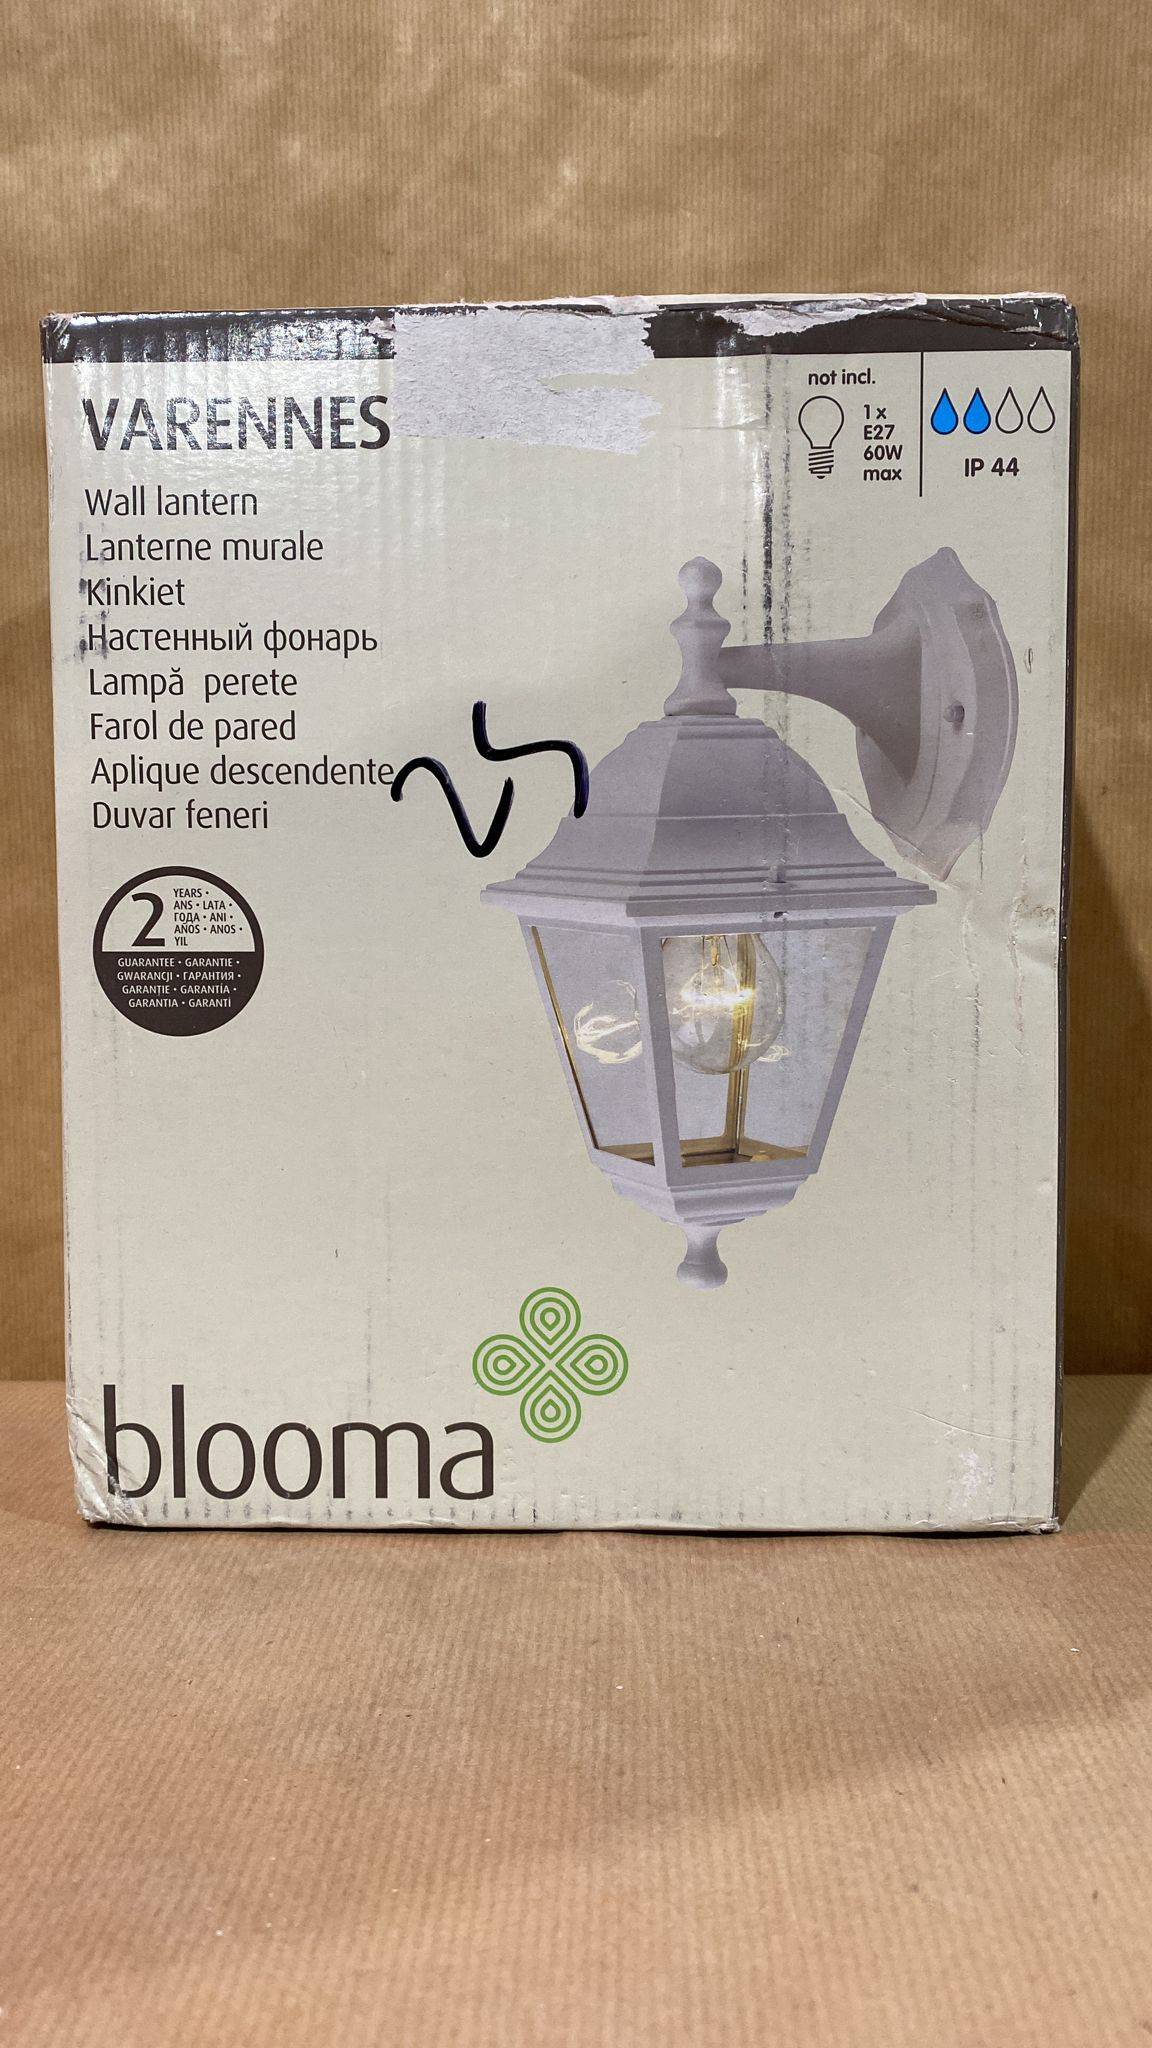 Blooma Varennes Matt White Mains-powered Halogen Outdoor Lantern Wall light - 4568